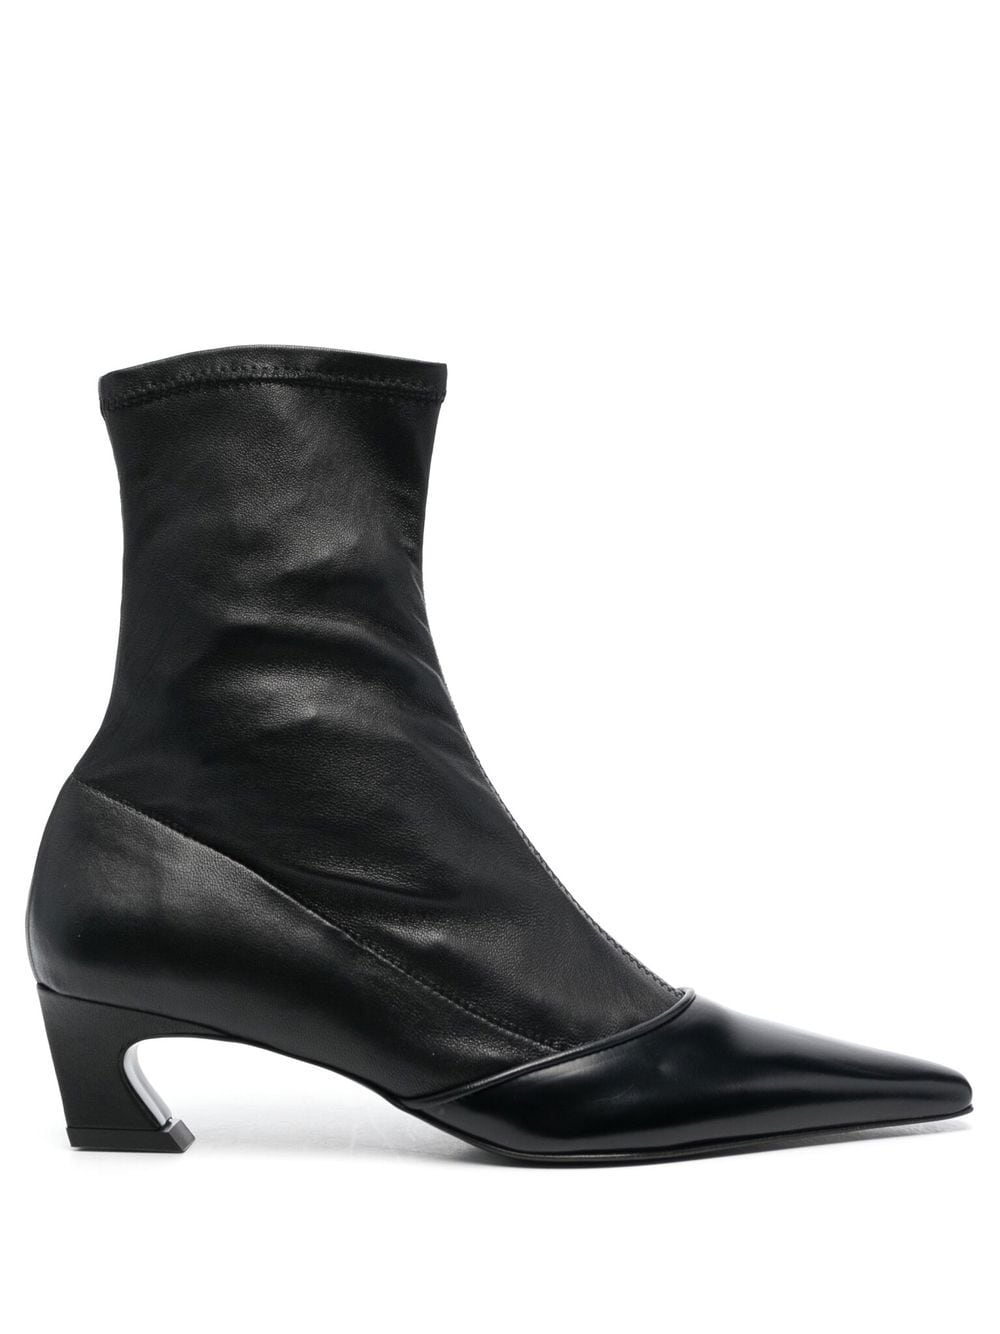 Acne Studios leather ankle boots - Black von Acne Studios